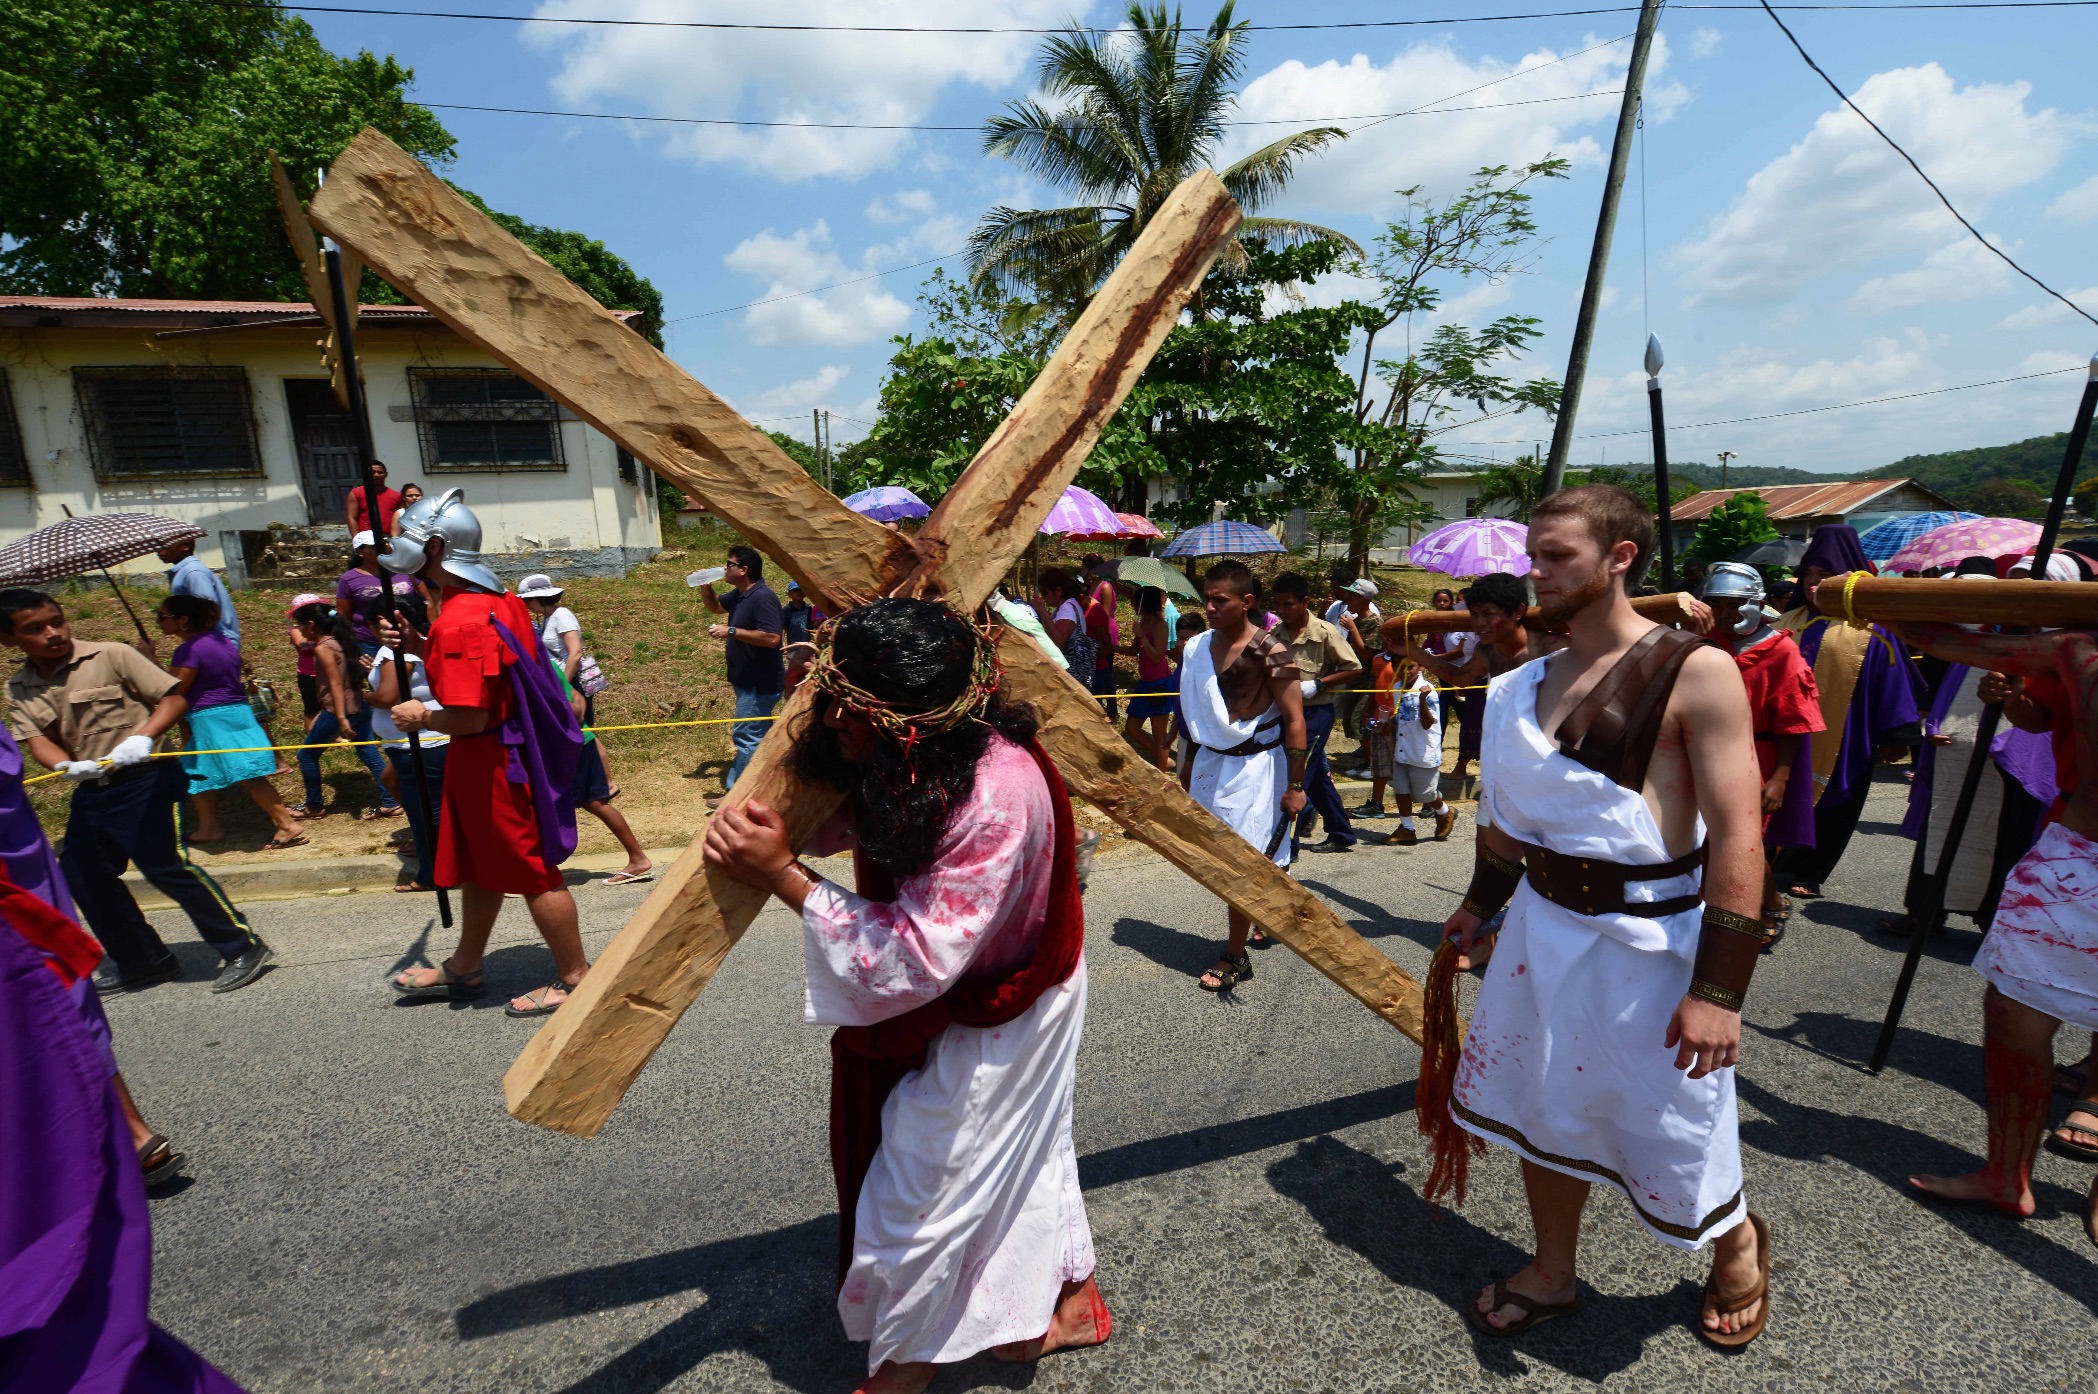 Celebrating Easter in Belize | The Holy & the Heartfelt